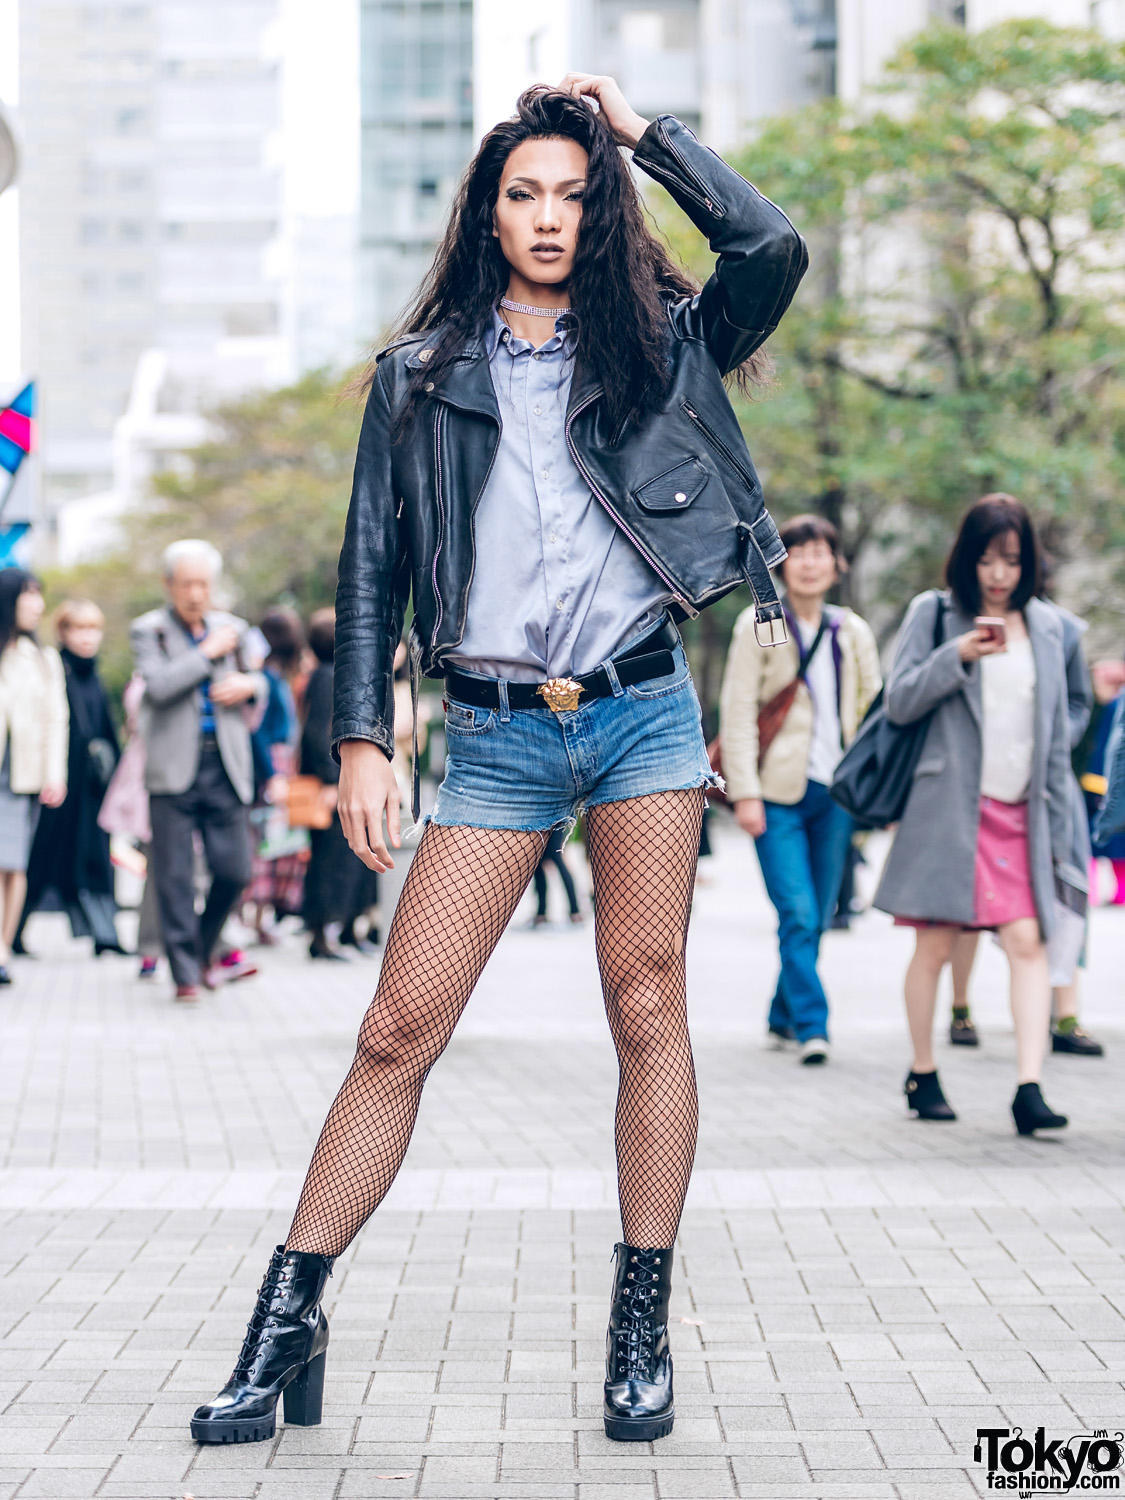 Beauty Student w/ Black Leather Jacket, Jean Shorts, Fishnet